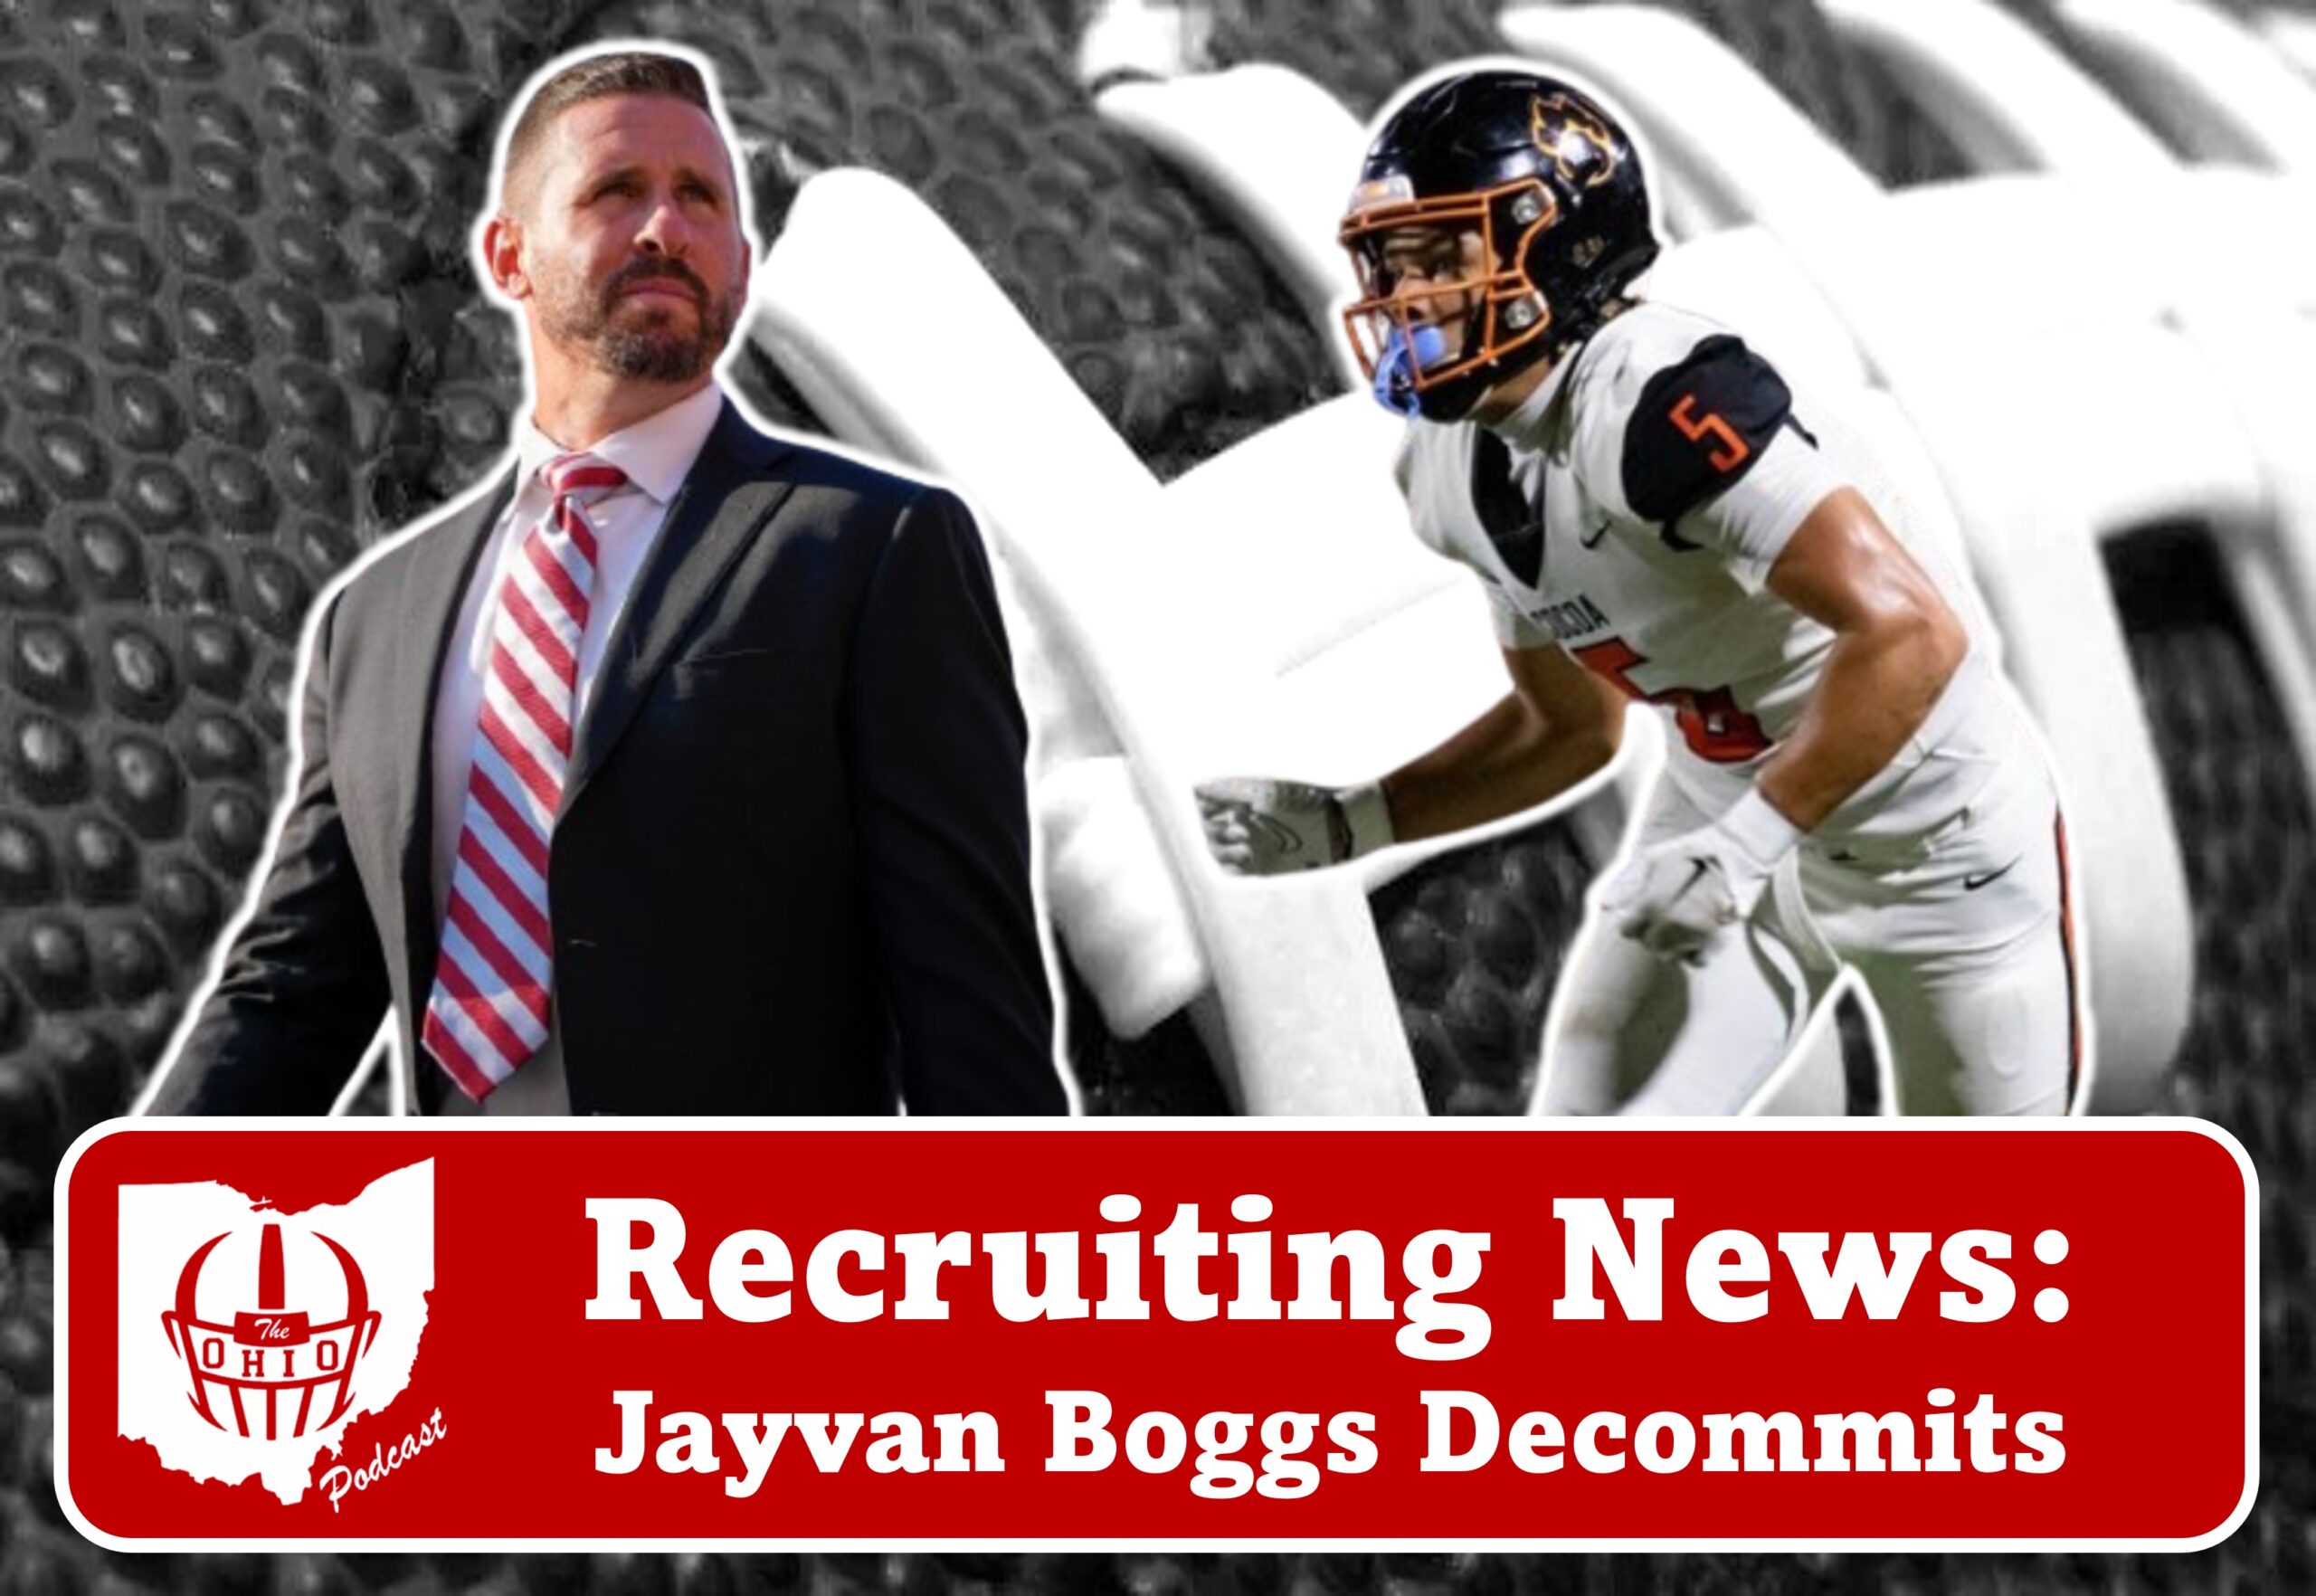 Ohio State Football Recruit Jayvan Boggs Decommits